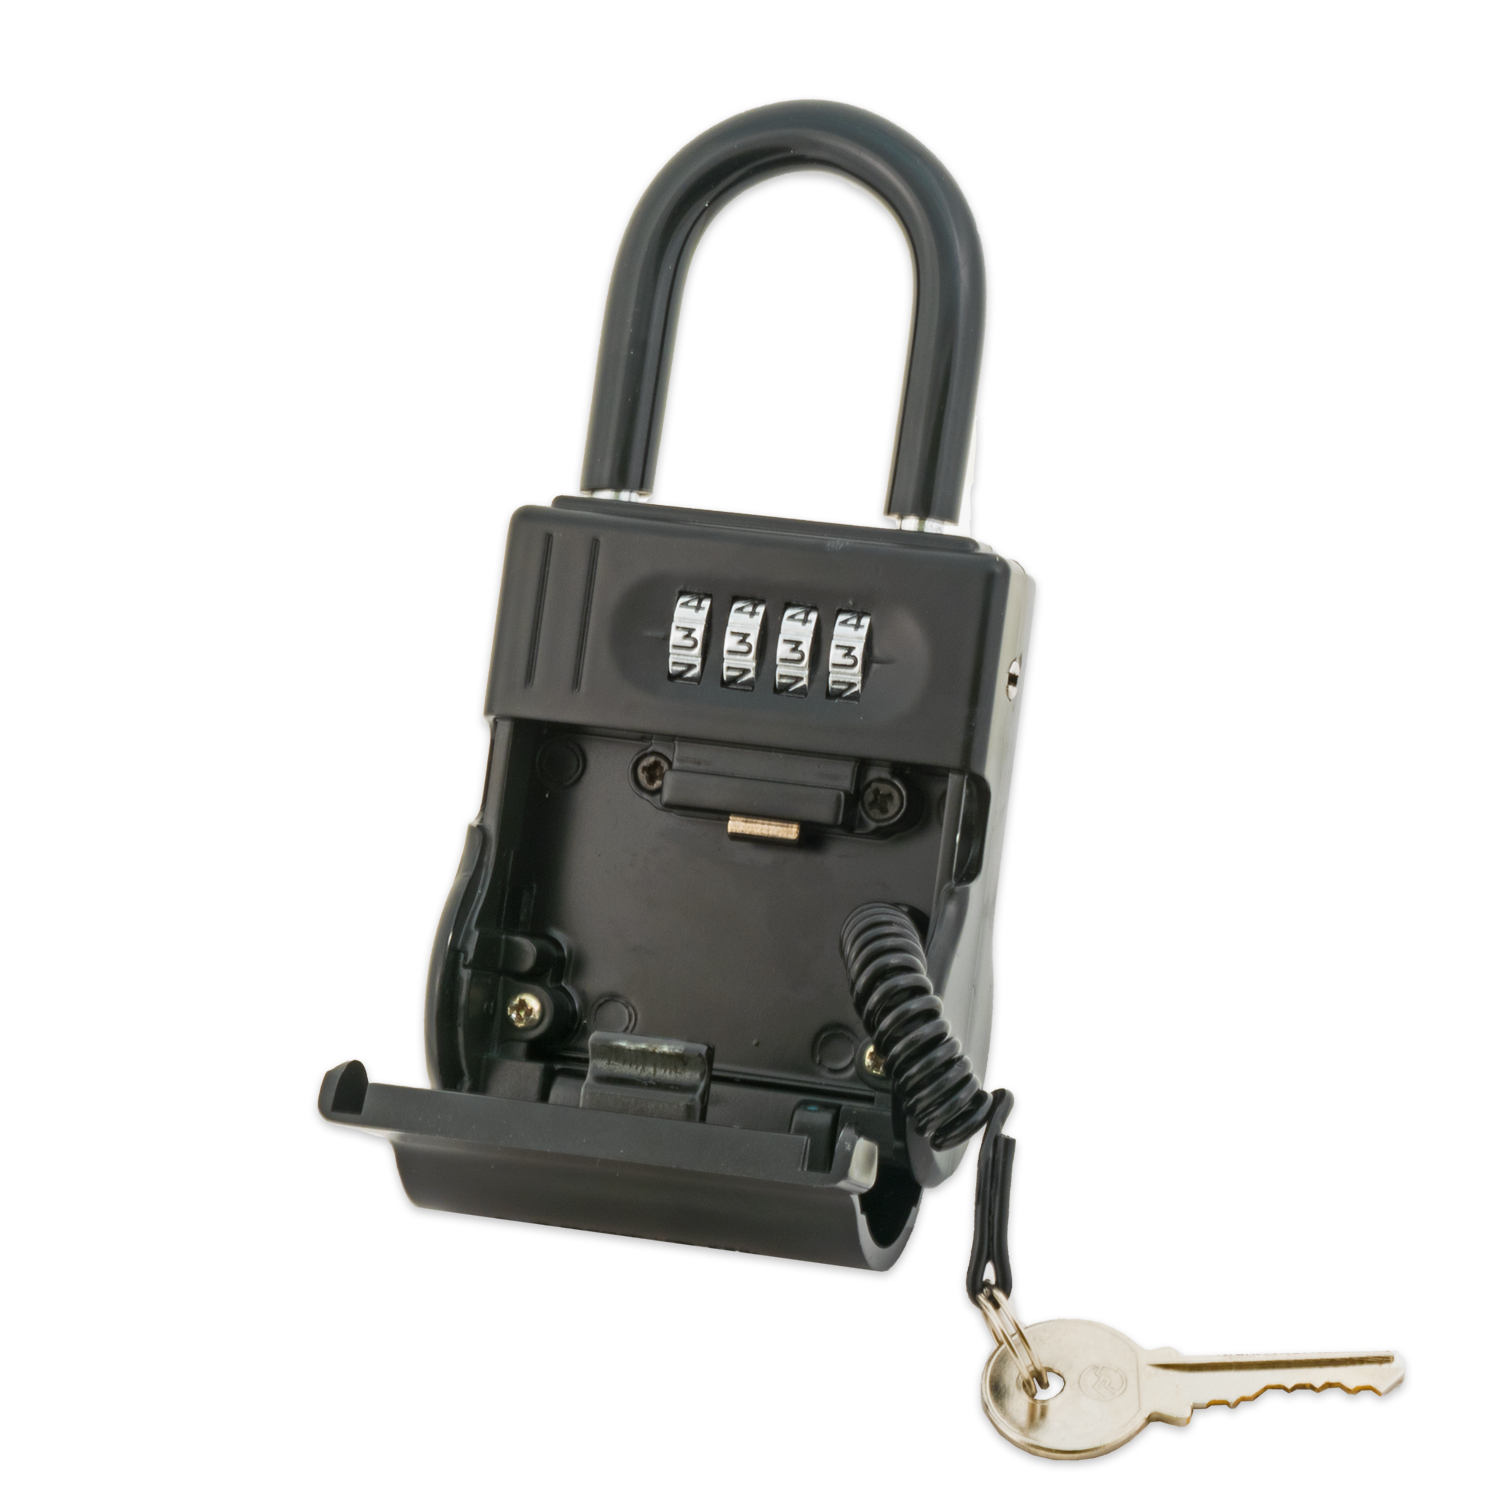 12 NEW Shurlok SL600 Lock Boxes Key Storage Lock Realtor Lockbox Real Estate 